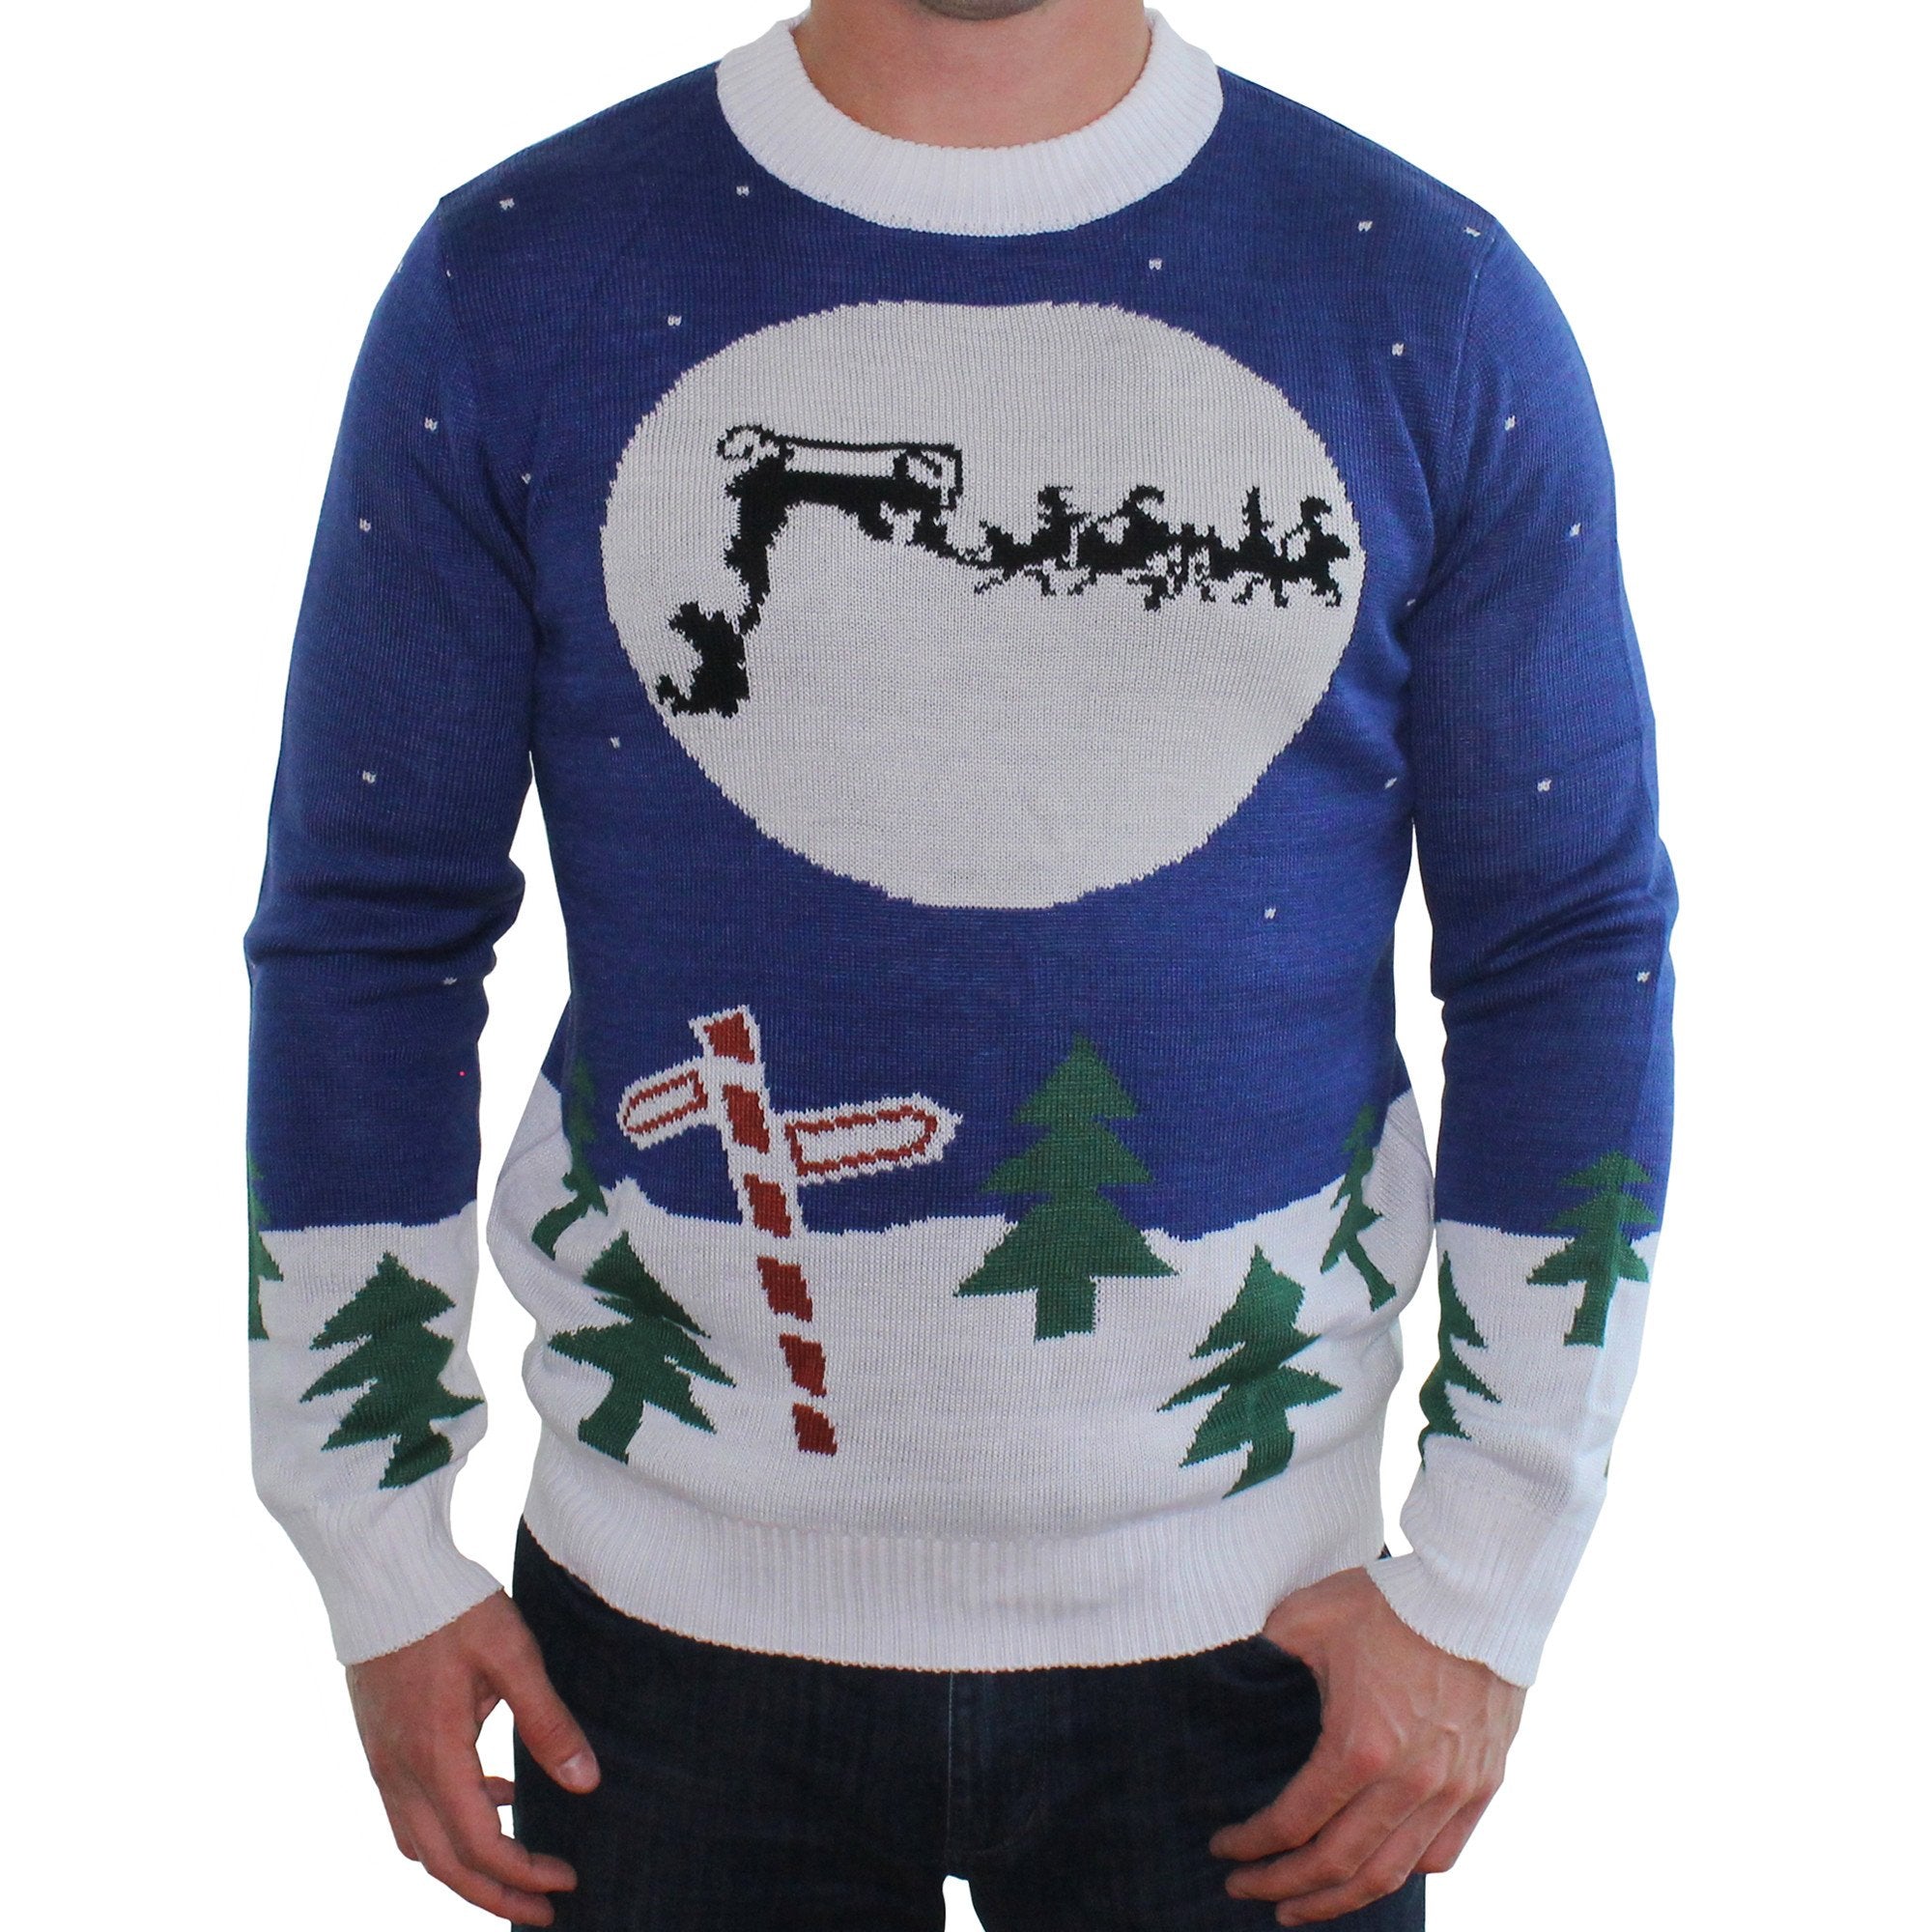 Tacky Blue Sweater Runaway Sleigh Santa